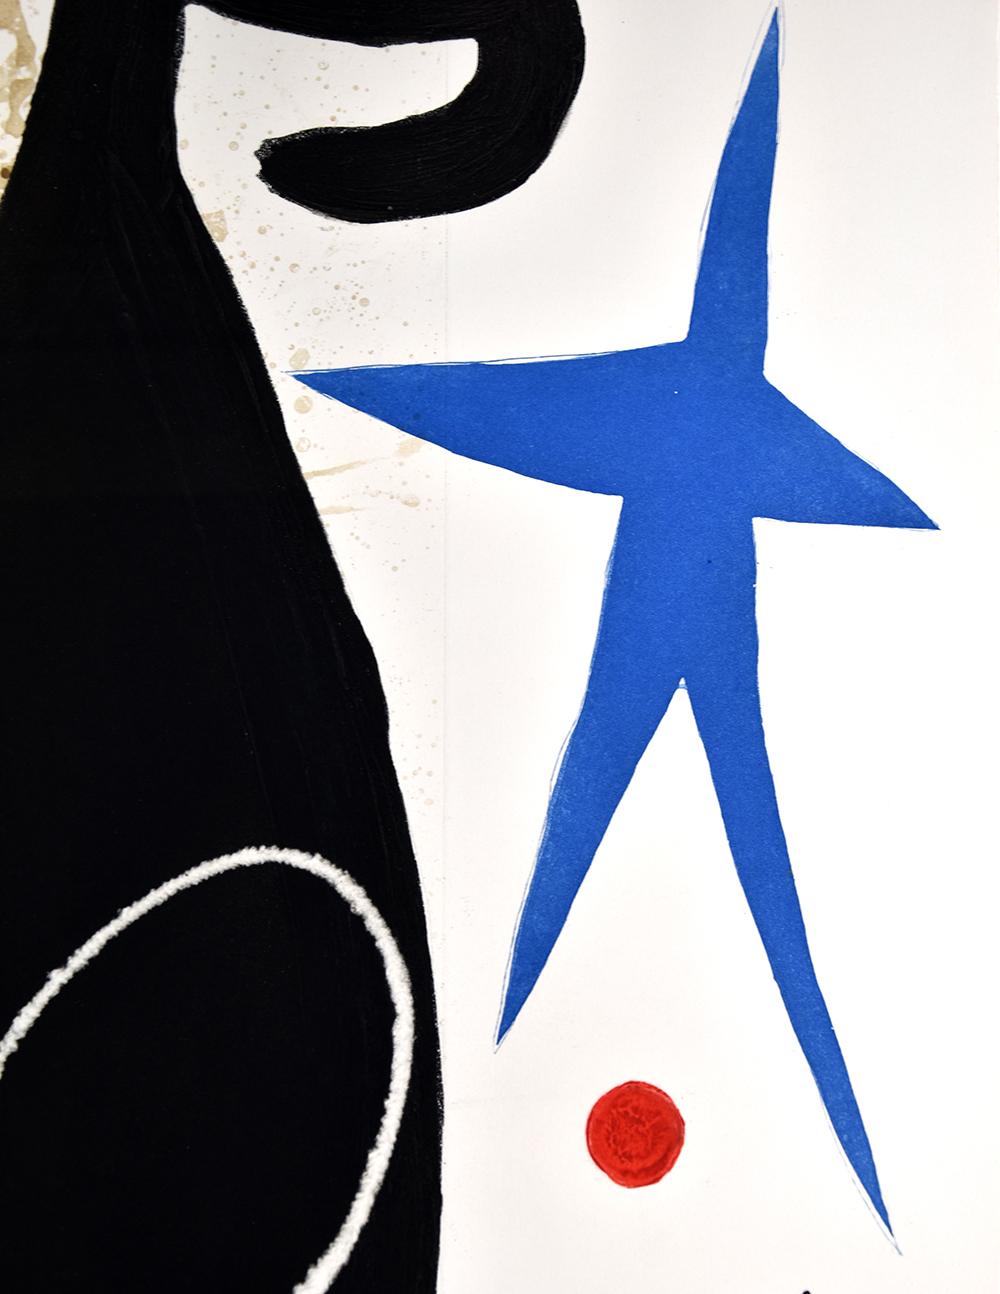 Le Serrasin à L’étoile Bleue (Buckwheat with Blue Star), 1973 - Modern Print by Joan Miró